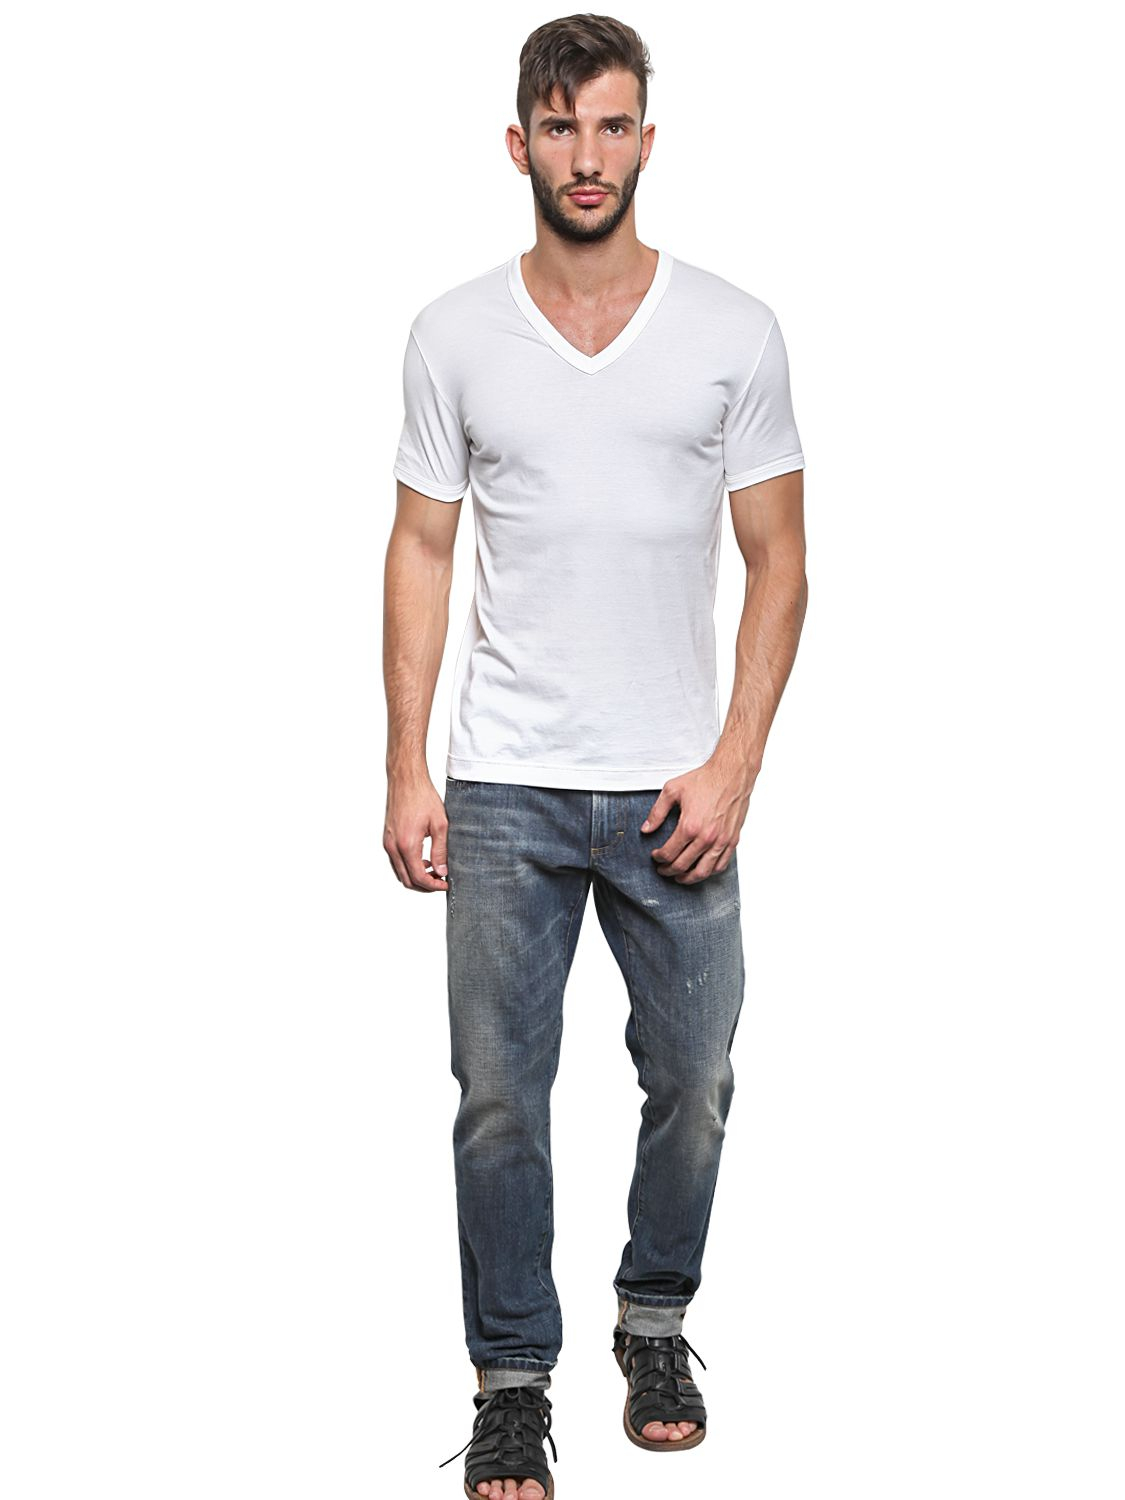 Lyst - Dolce & Gabbana Cotton Jersey V Neck T-Shirt in White for Men